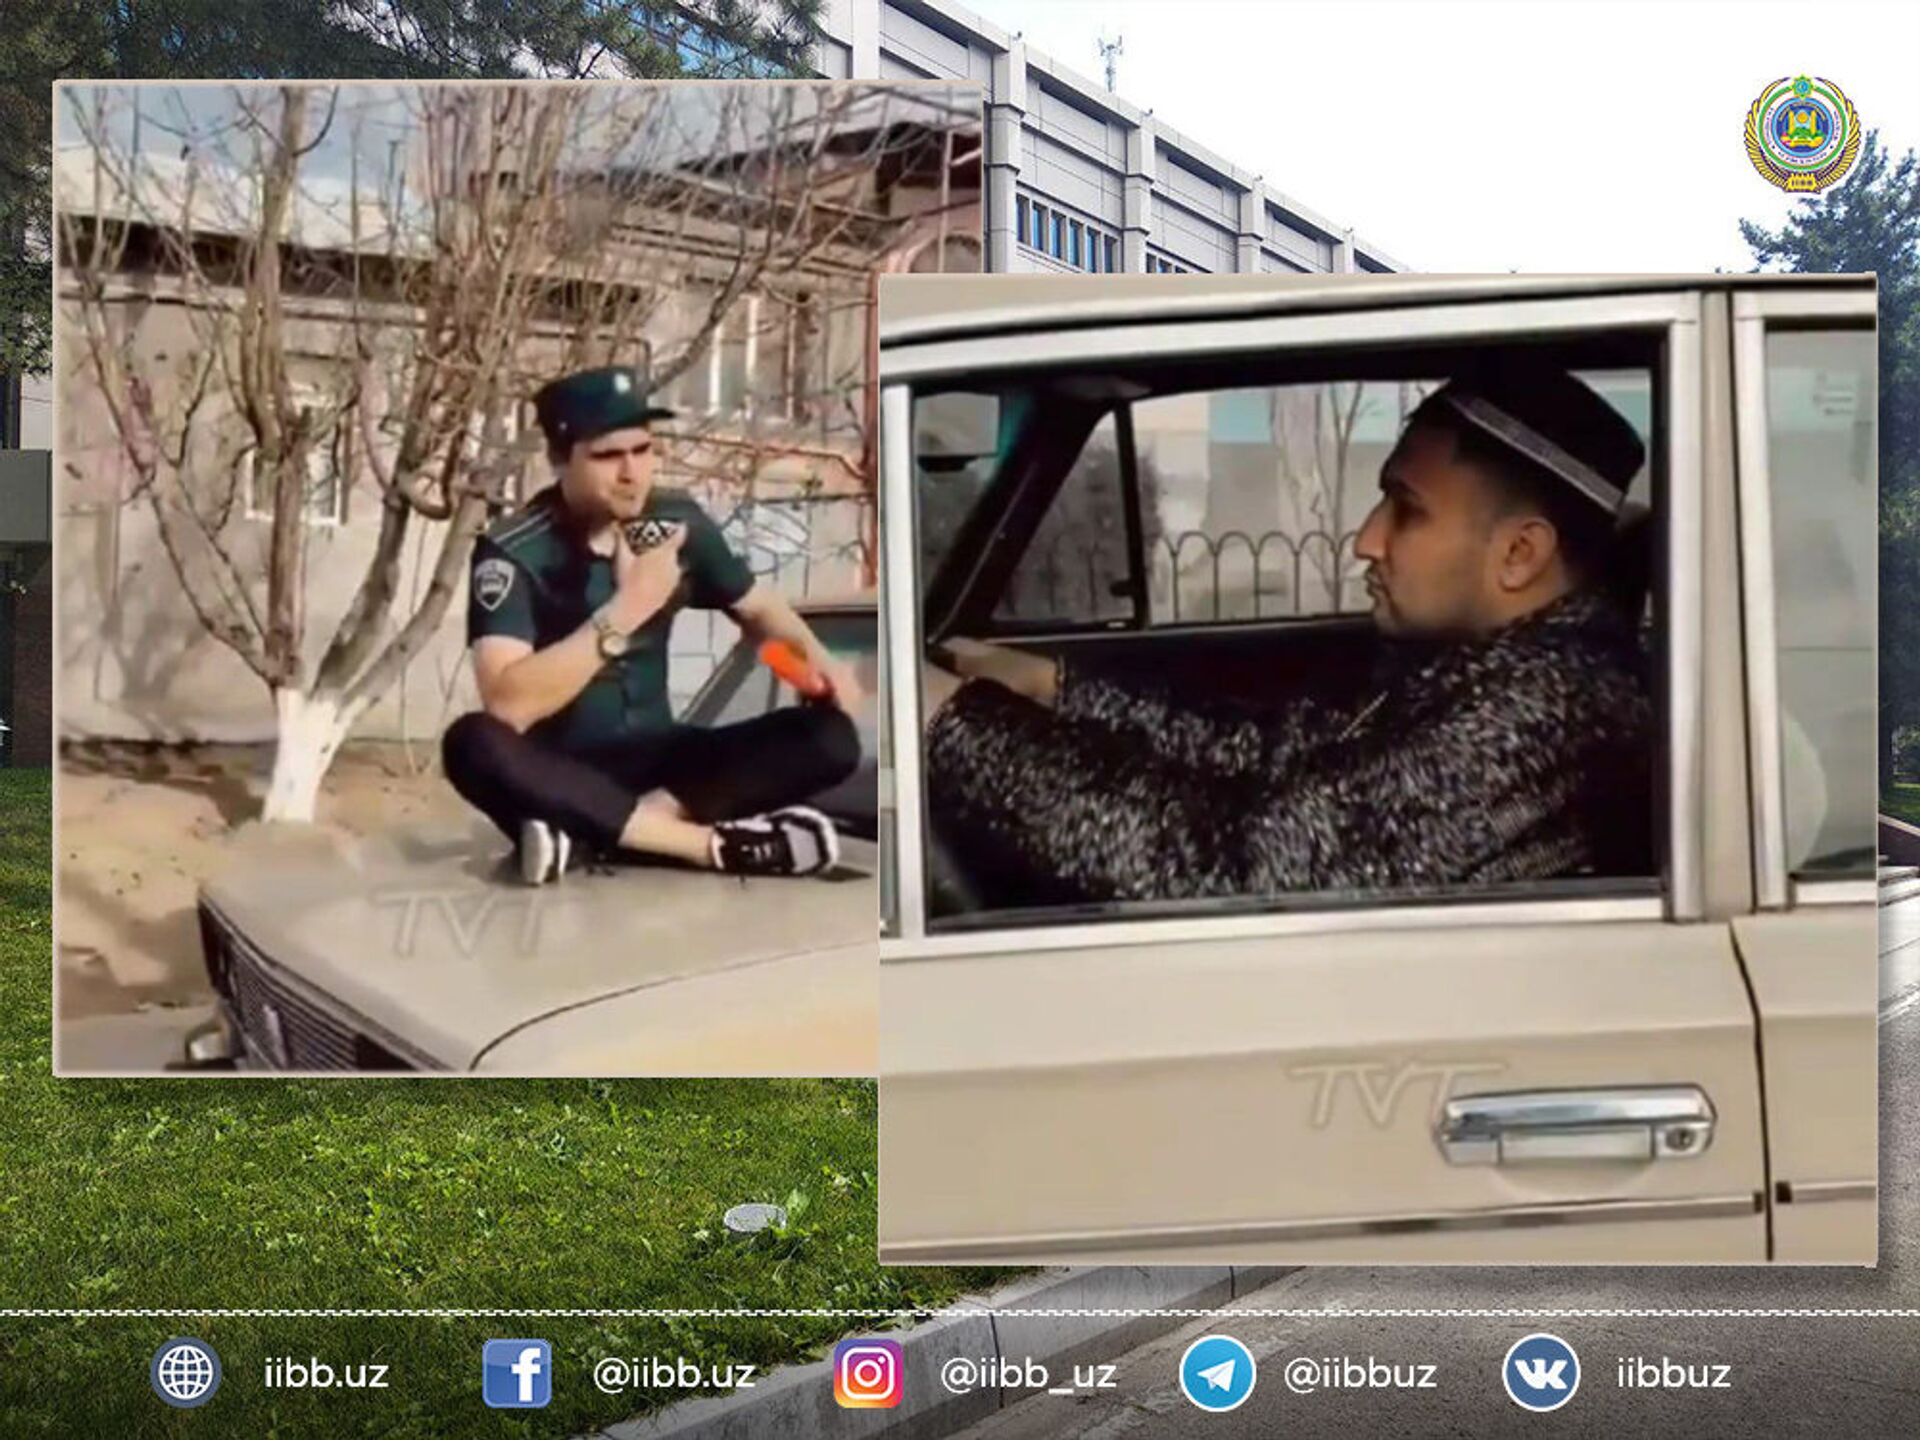 Скриншоты с видео, на котором мужчина в форме сотрудника ОВД едет на капоте автомобиля - Sputnik Узбекистан, 1920, 10.03.2021